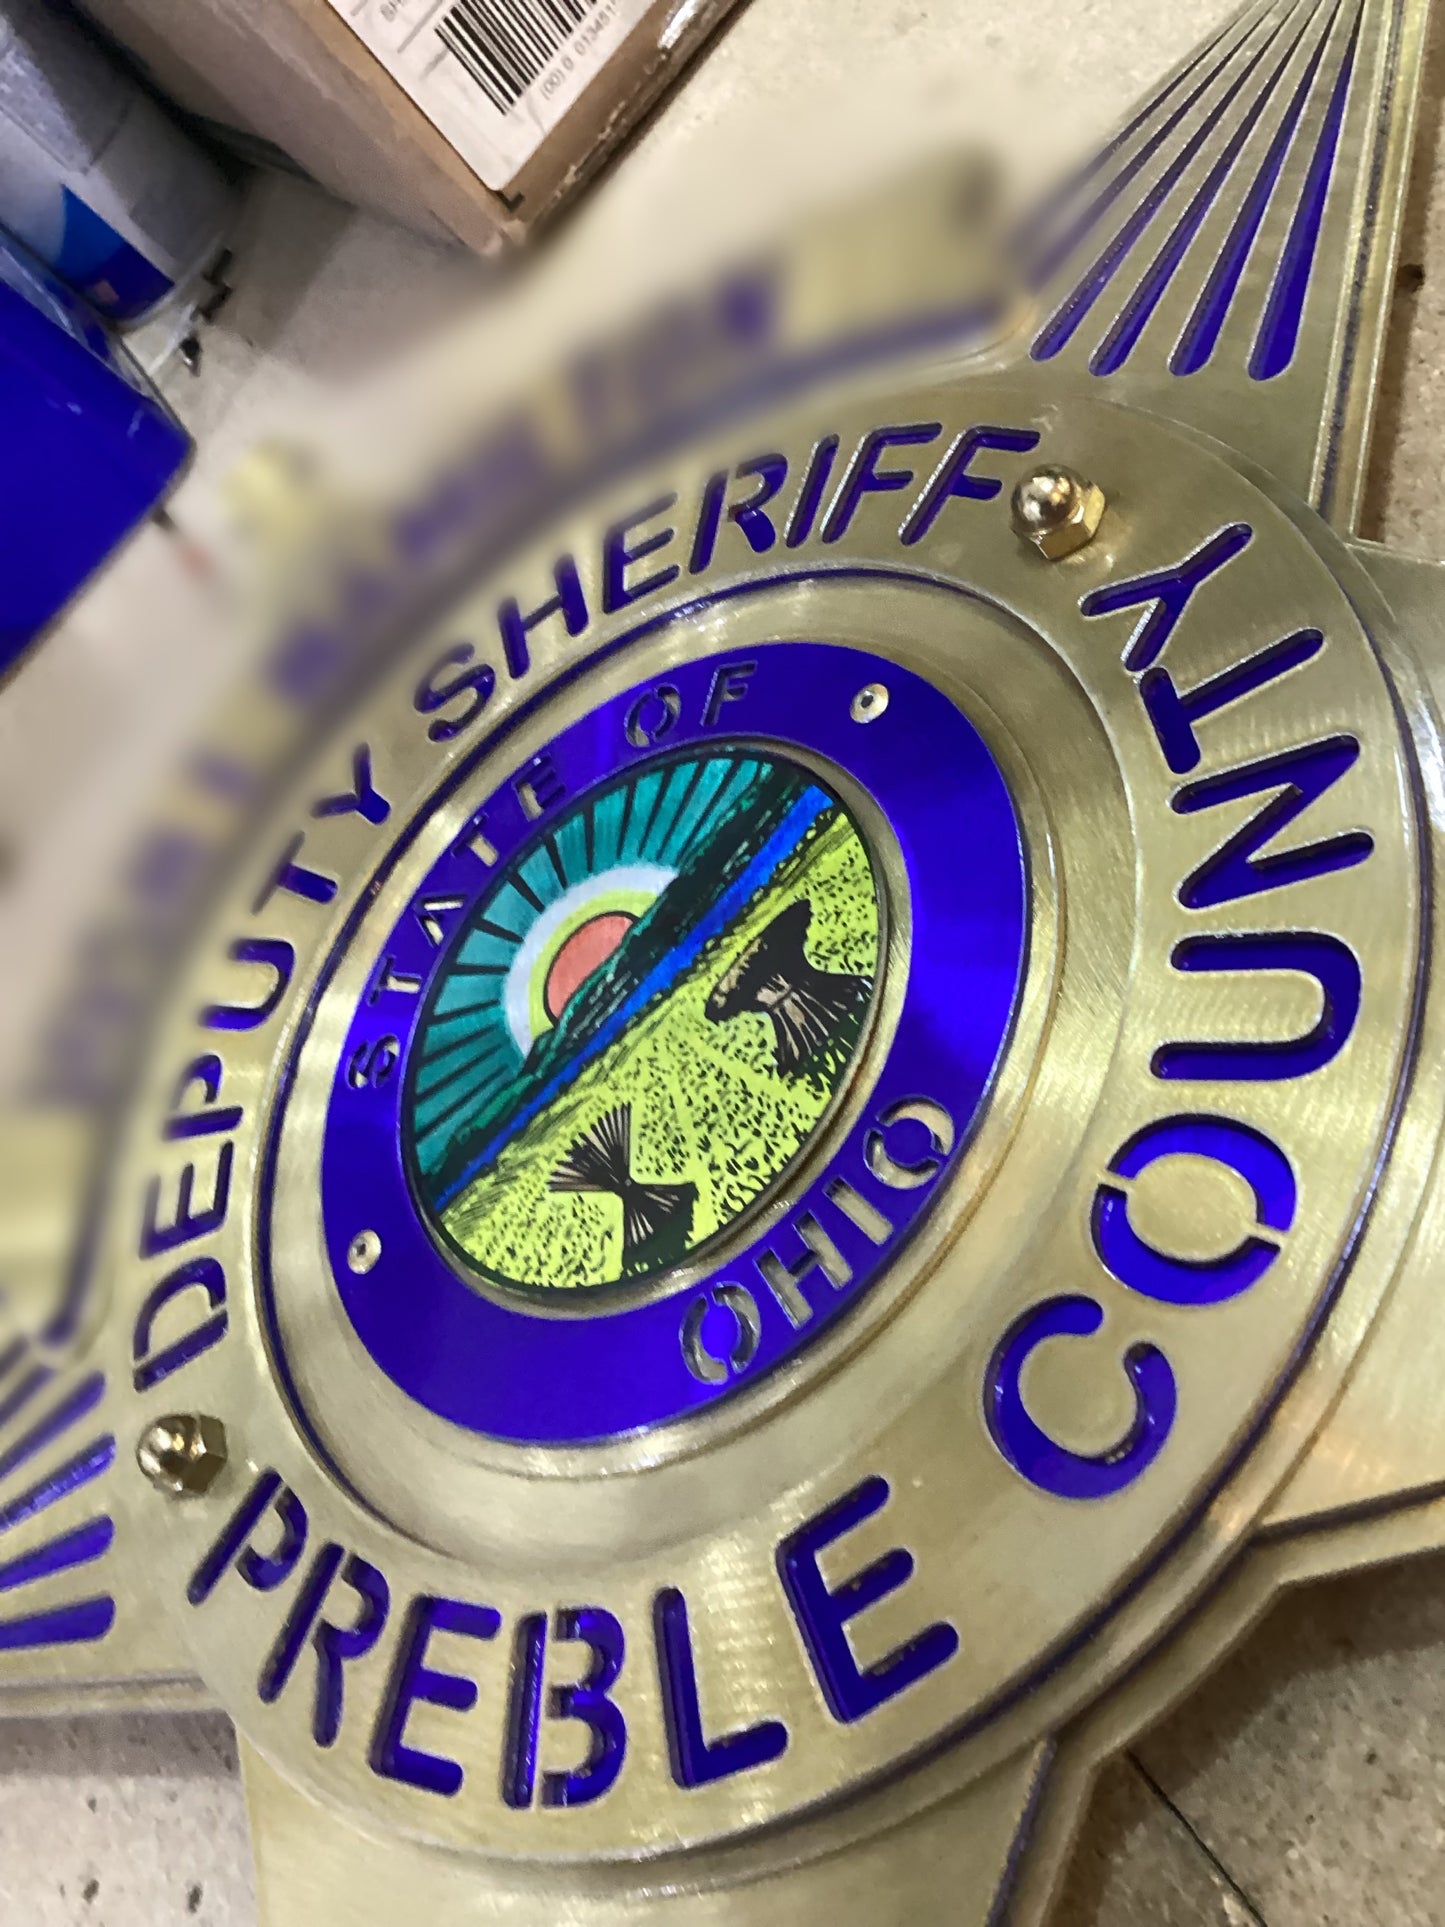 Preble County Sheriff Badge